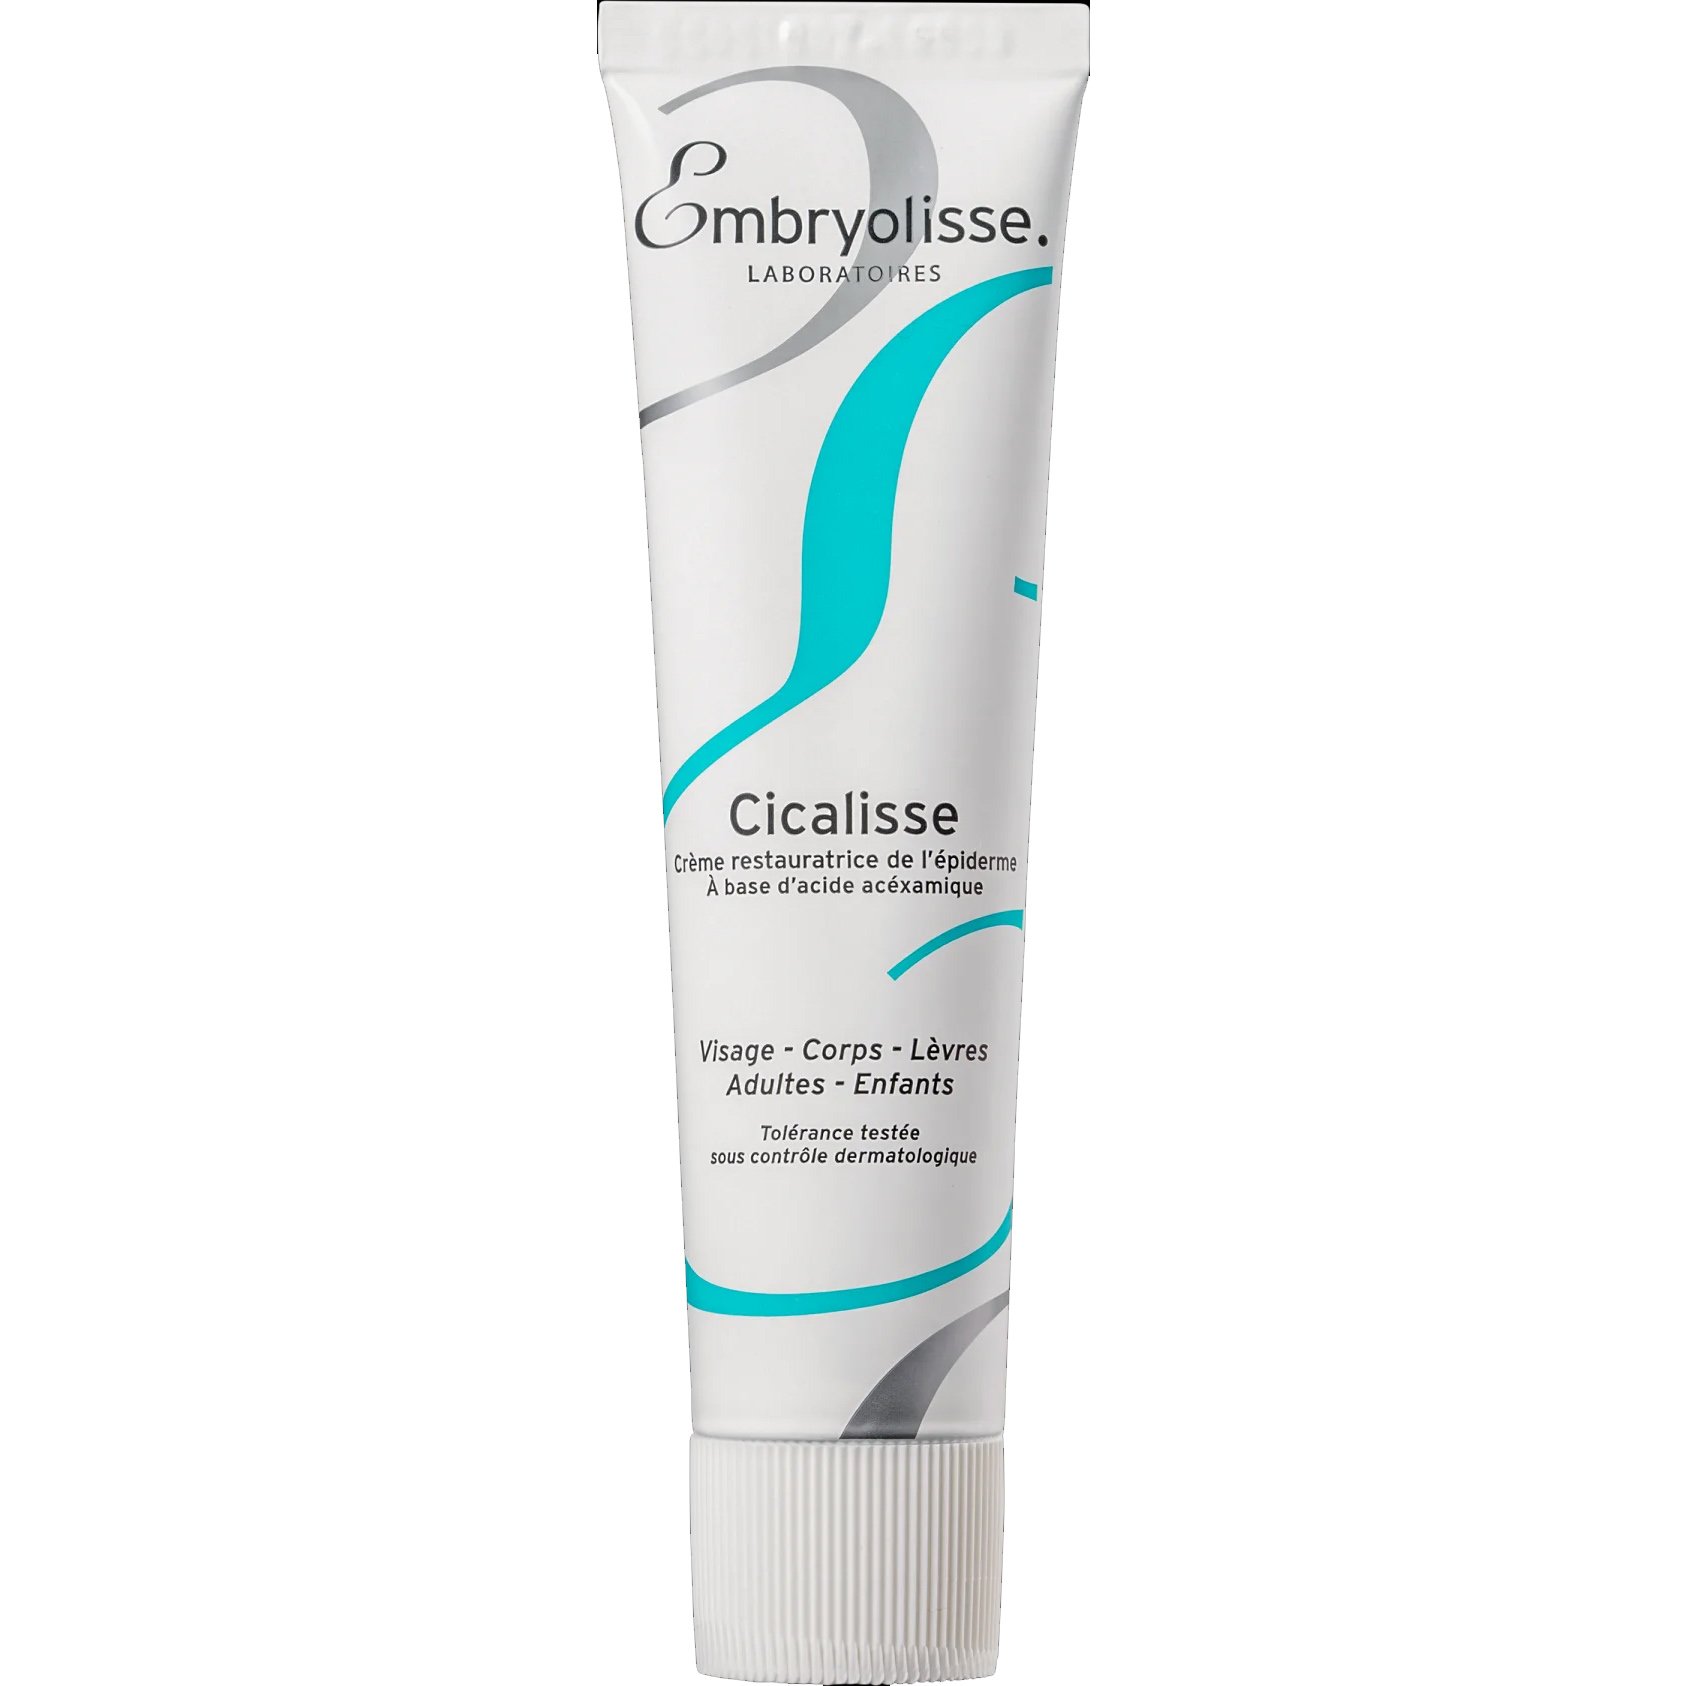 Embryolisse Cicalisse Restorative Skin Cream Κρέμα Αποκατάστασης της Επιδερμίδας με Ακεξαμικό Οξύ 40ml